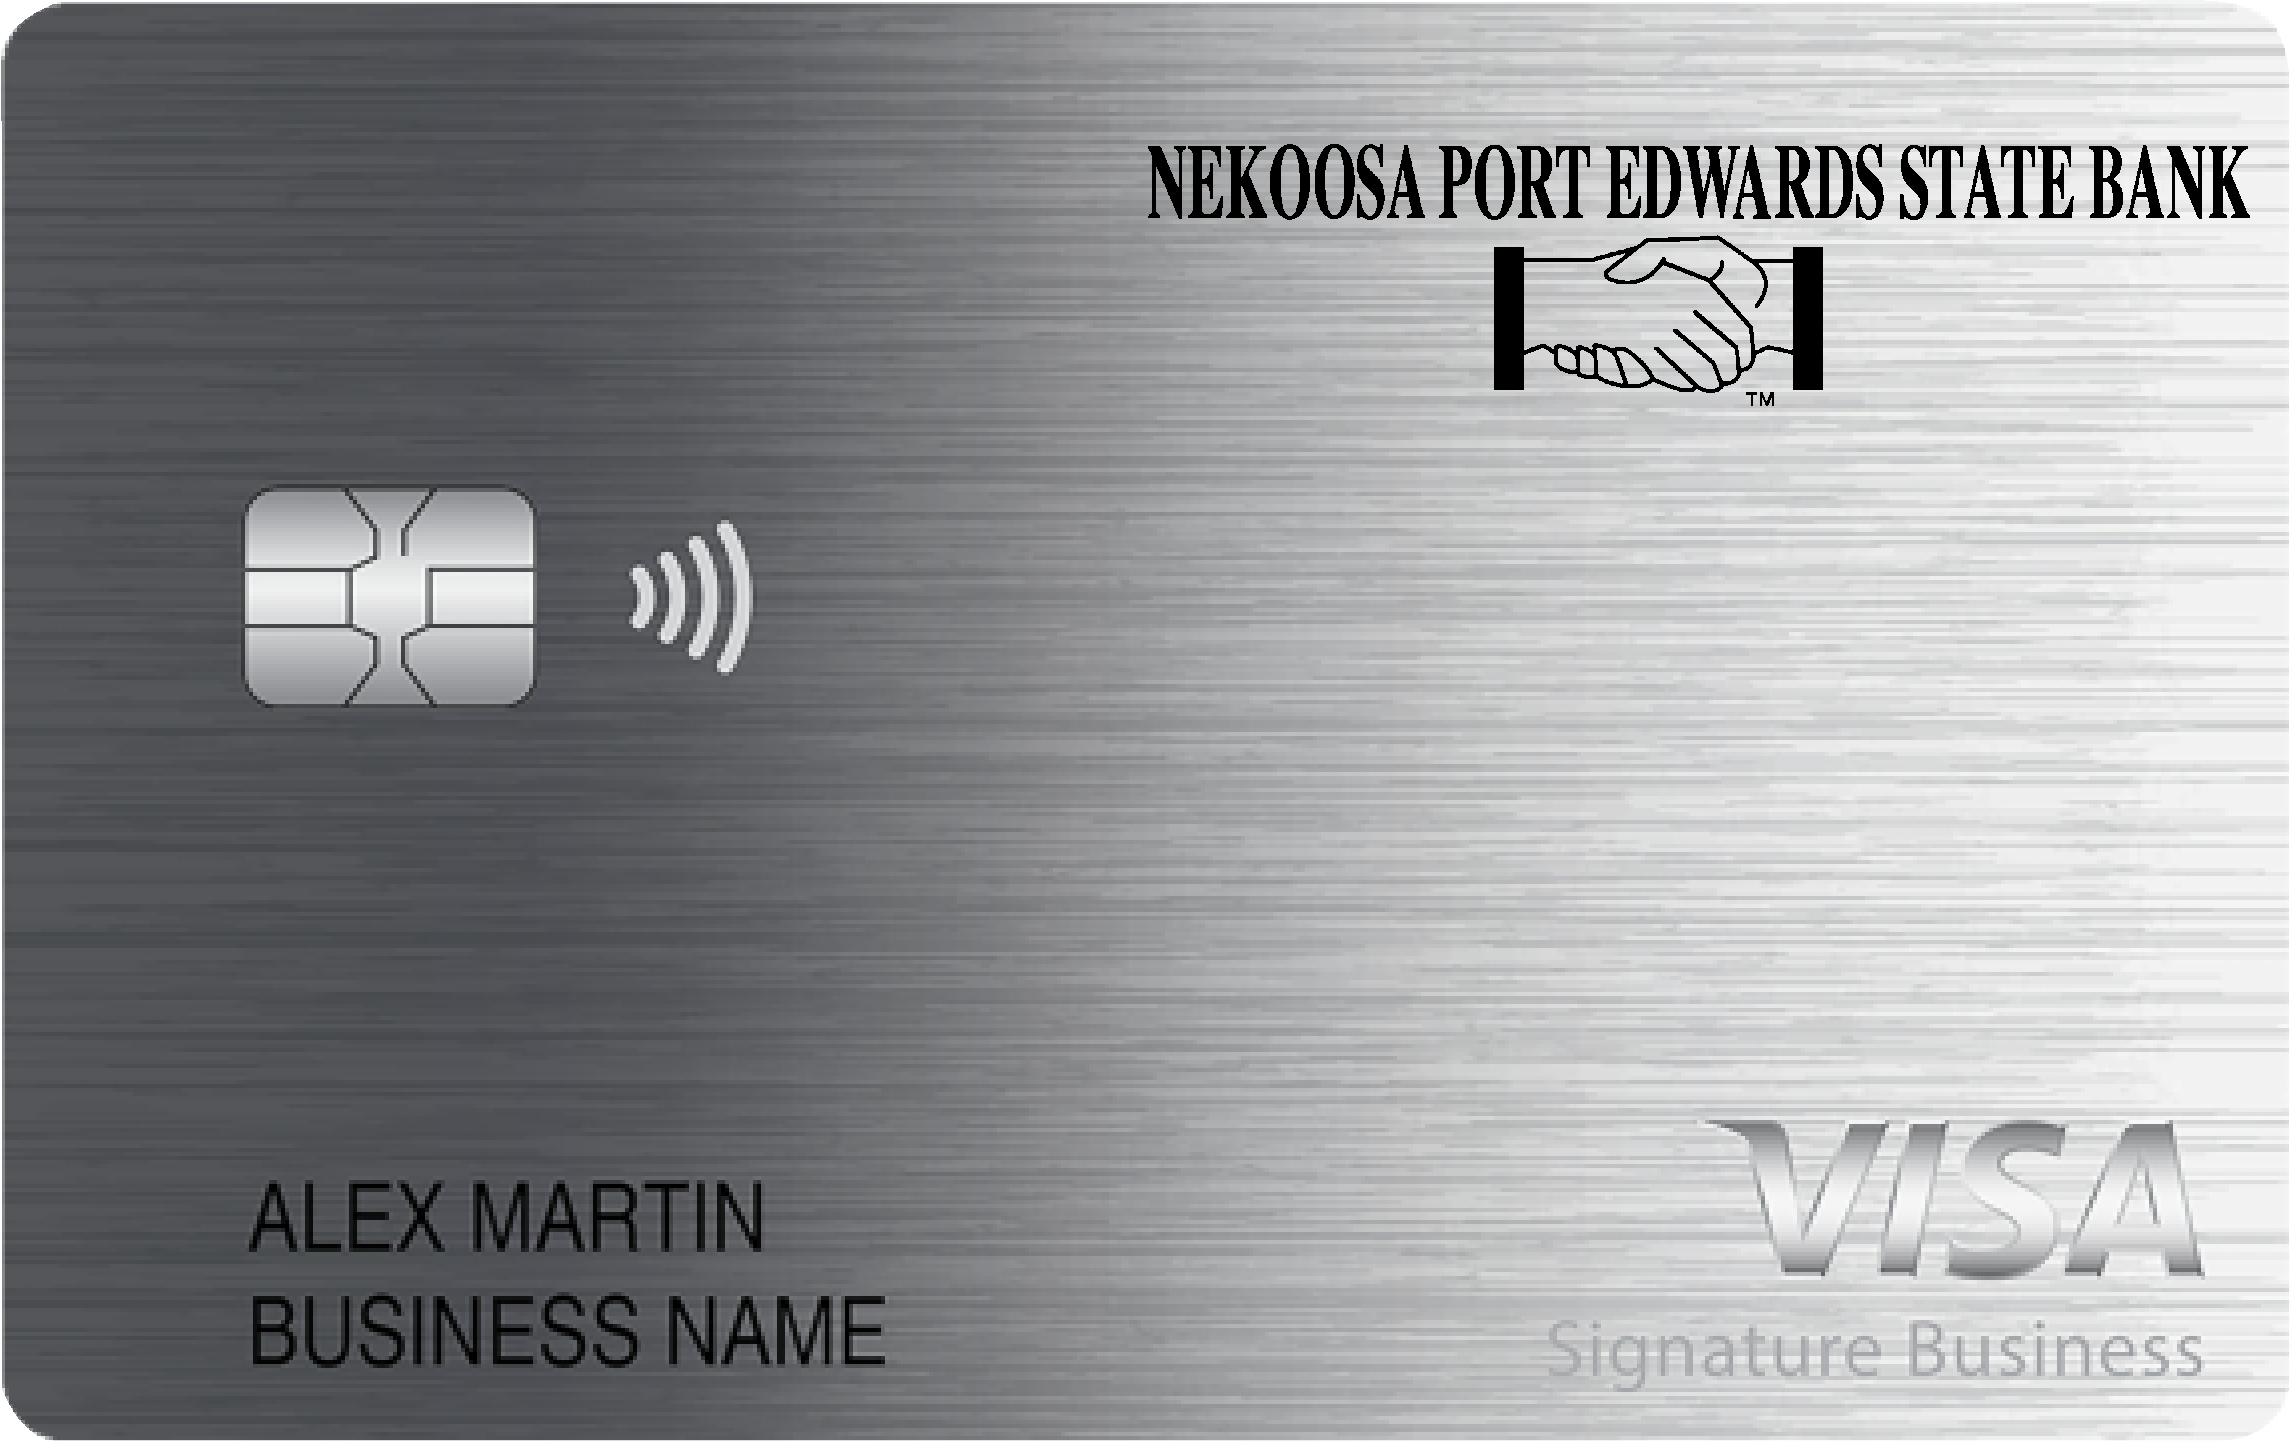 Nekoosa Port Edwards State Bank Smart Business Rewards Card